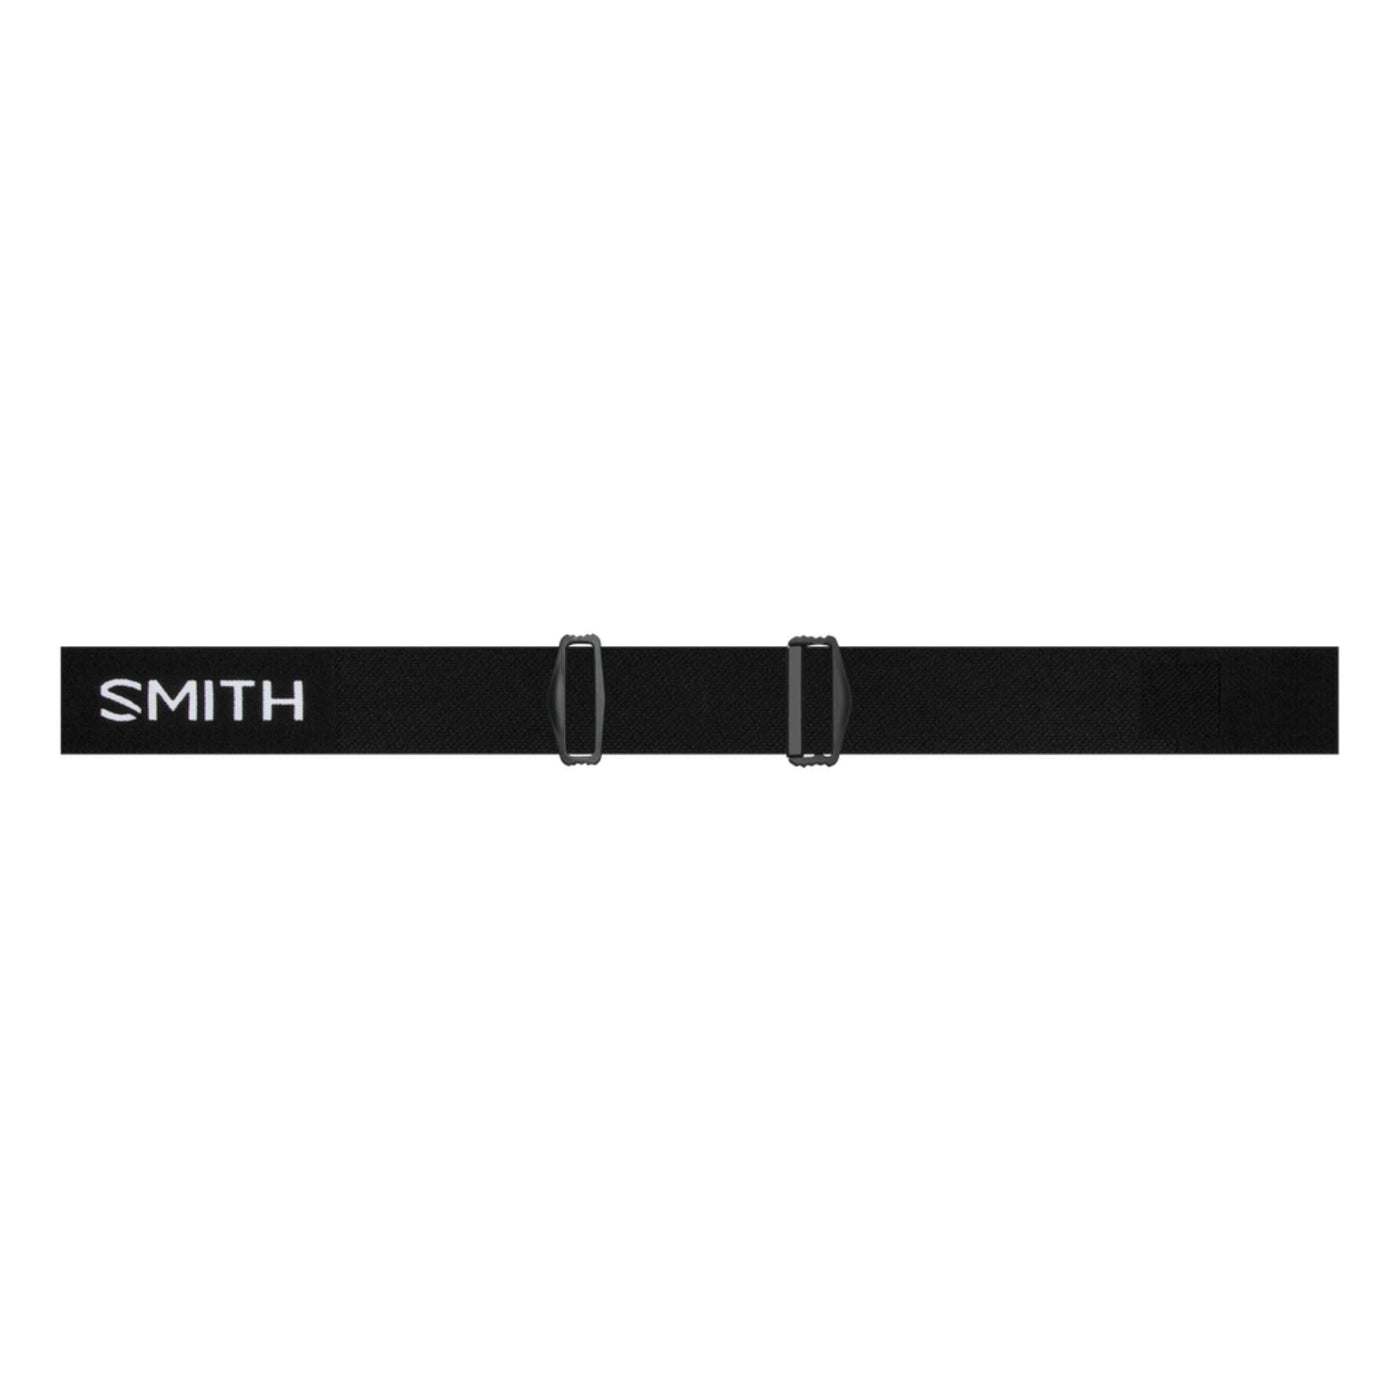 Smith Skyline XL ChromaPop Sunglasses - Photochromic Rose Flash Lens | Performance Sunglasses | Further Faster Christchurch NZ